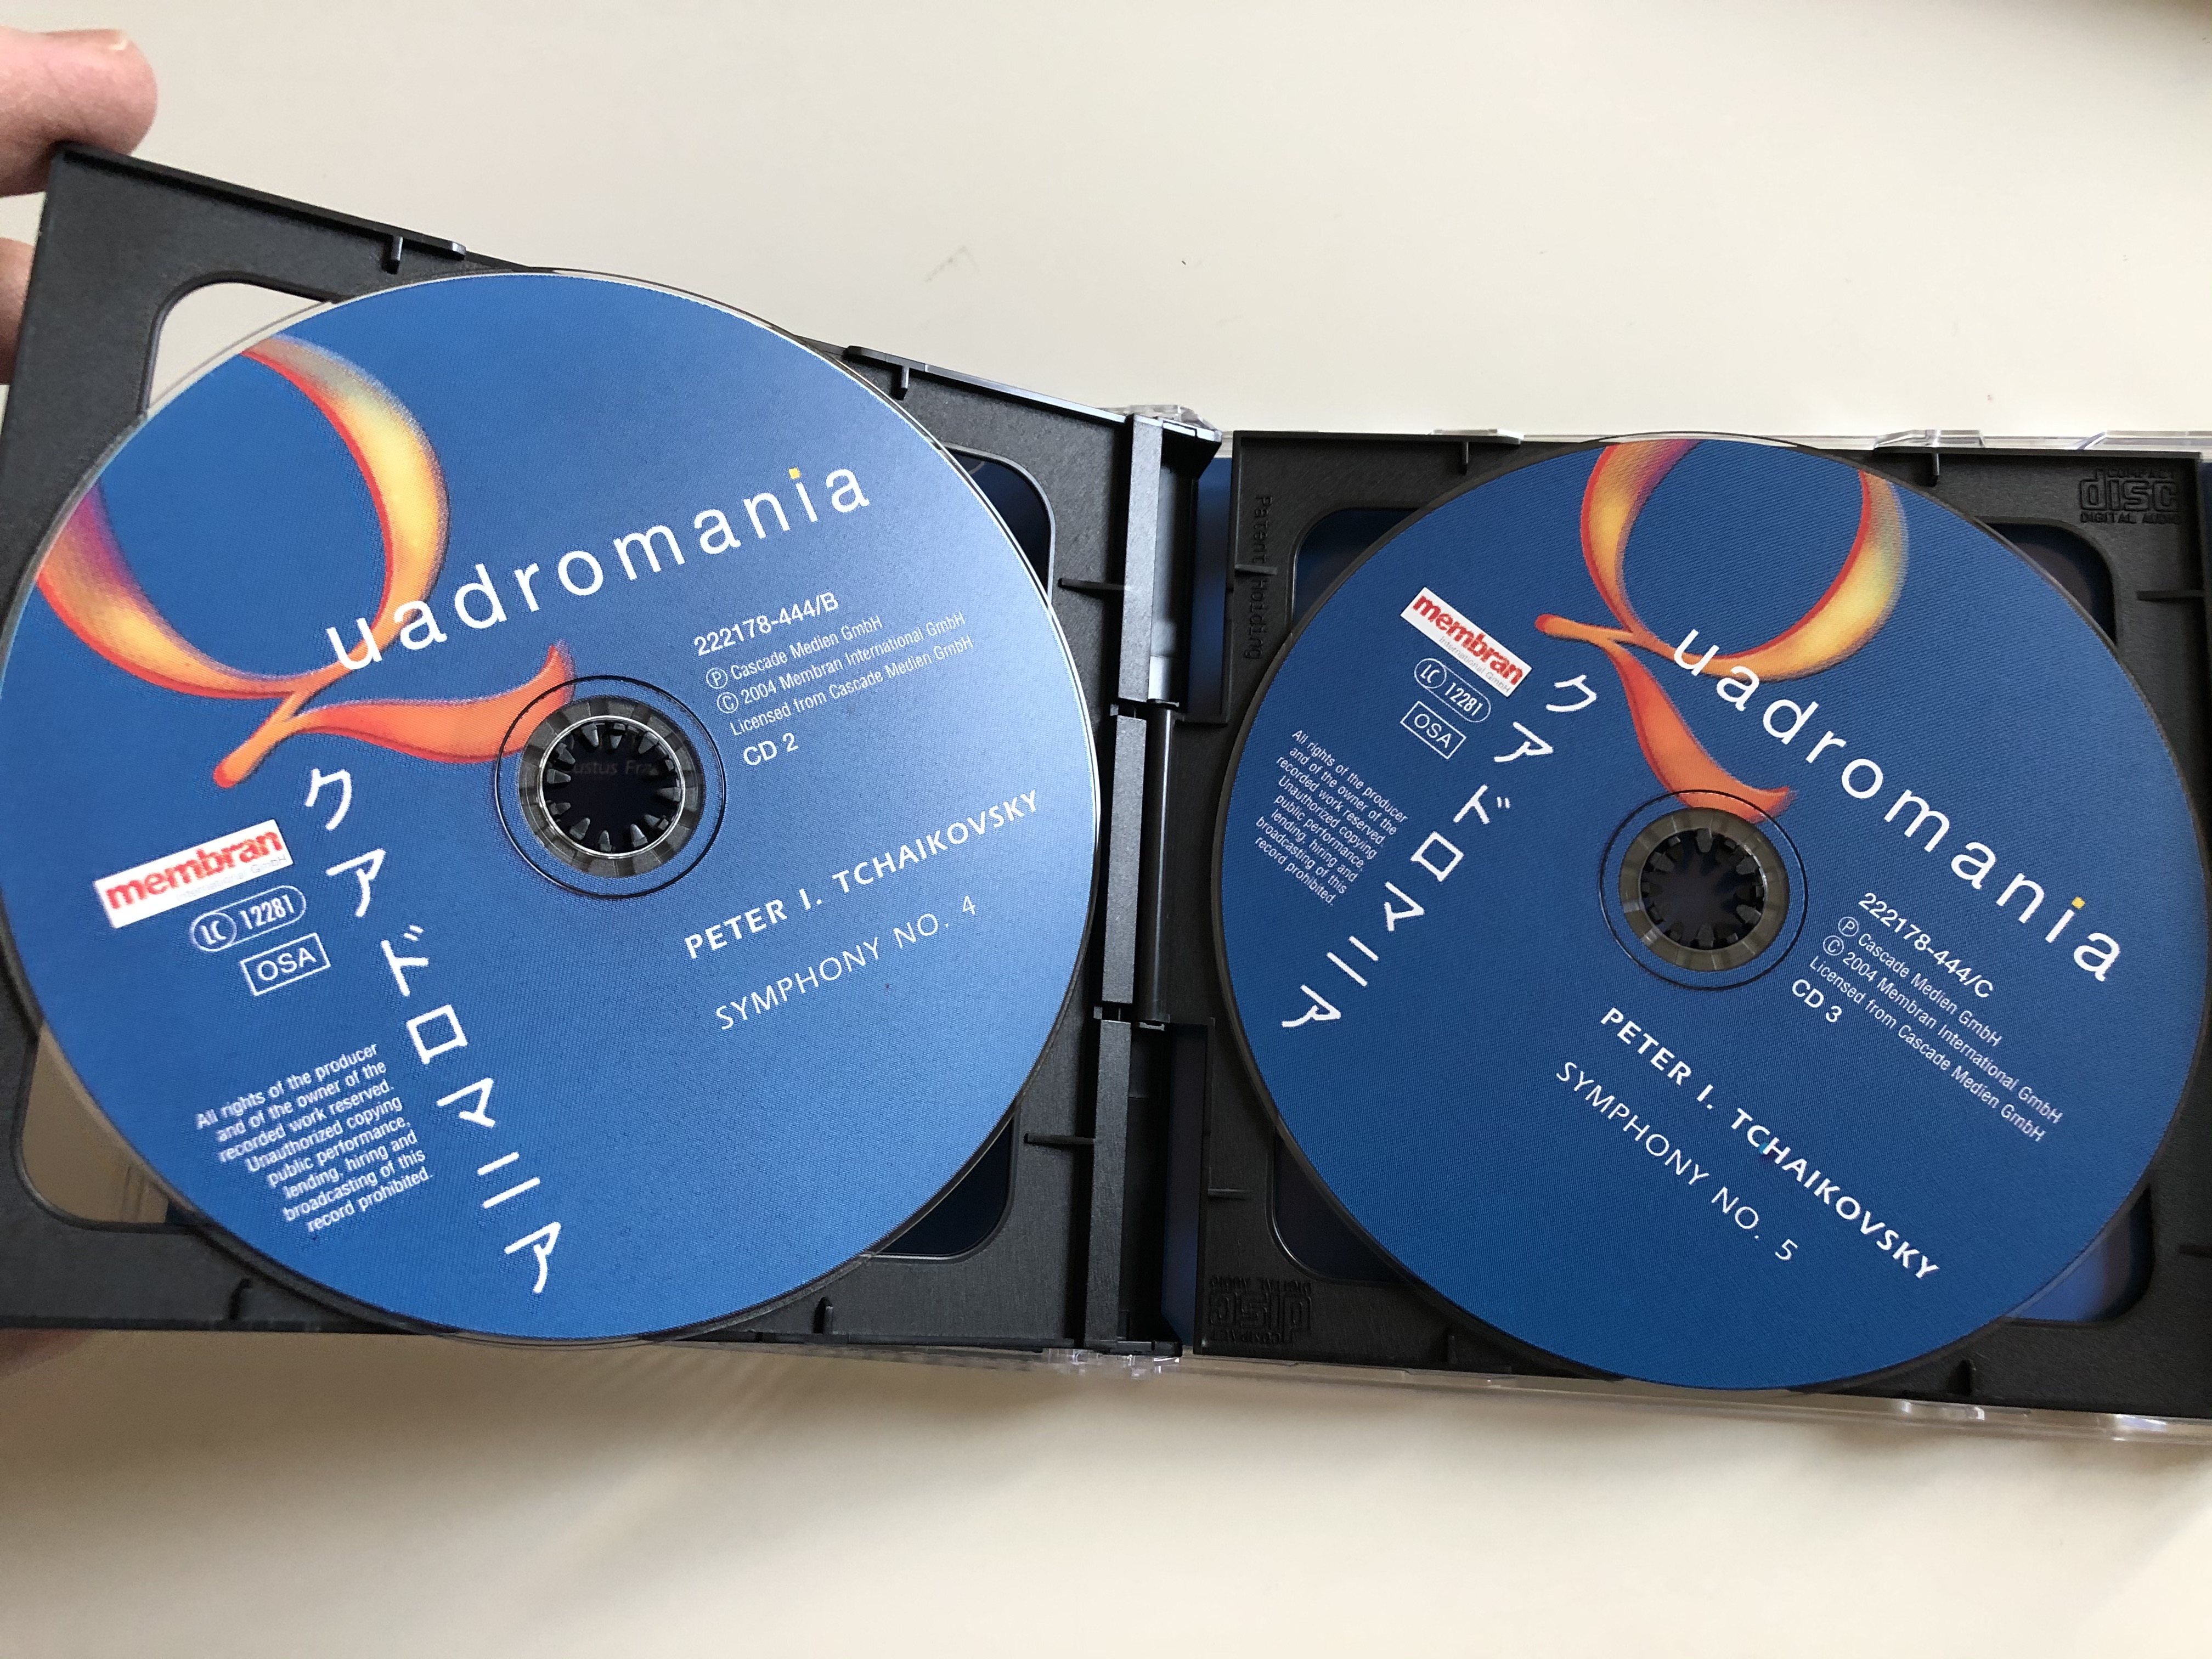 quadromania-4-peter-i.-tchaikovsky-symphonies-nos.-2-4-6-quadromania-4x-audio-cd-2004-222178-444-7-.jpg